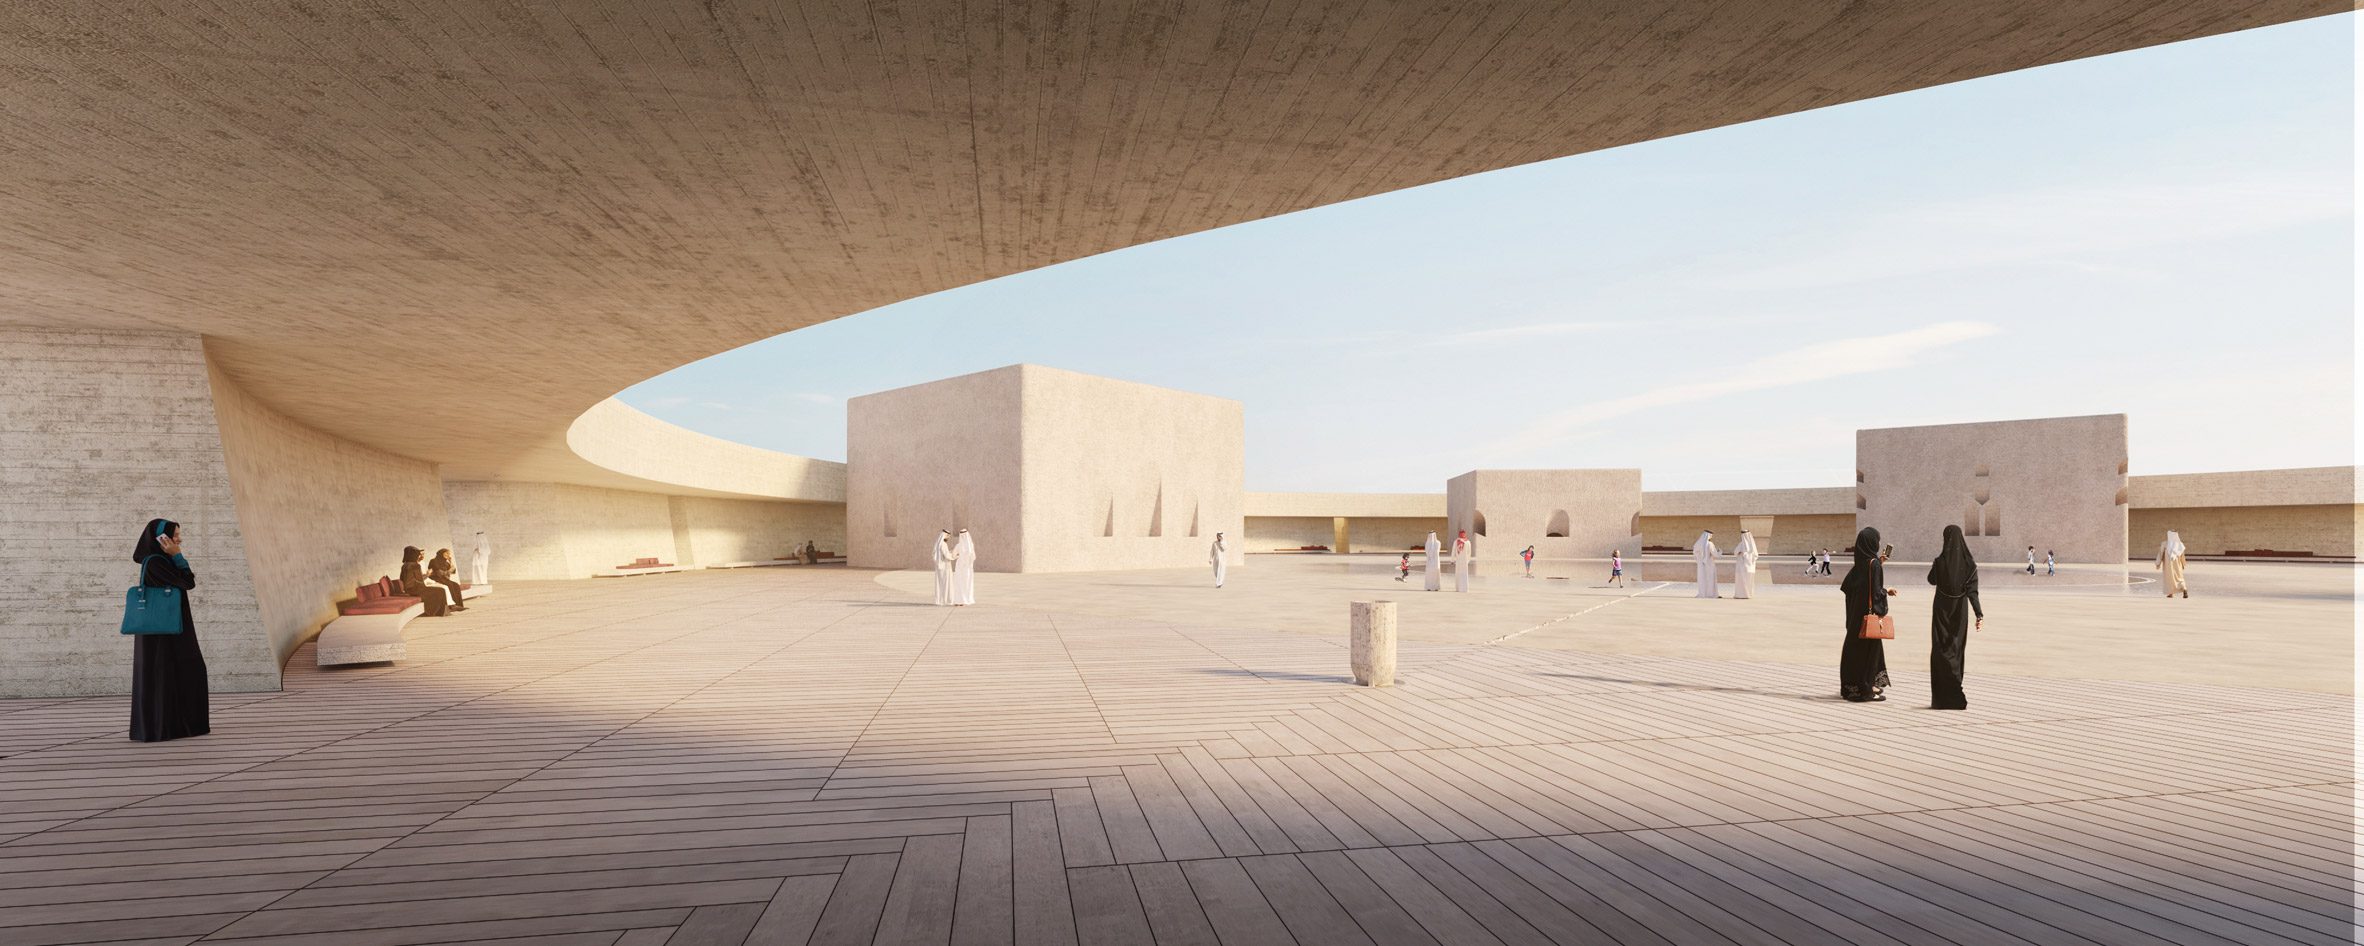 Rooftop terrace in Lusail Museum by Herzog & de Meuron in Qatar